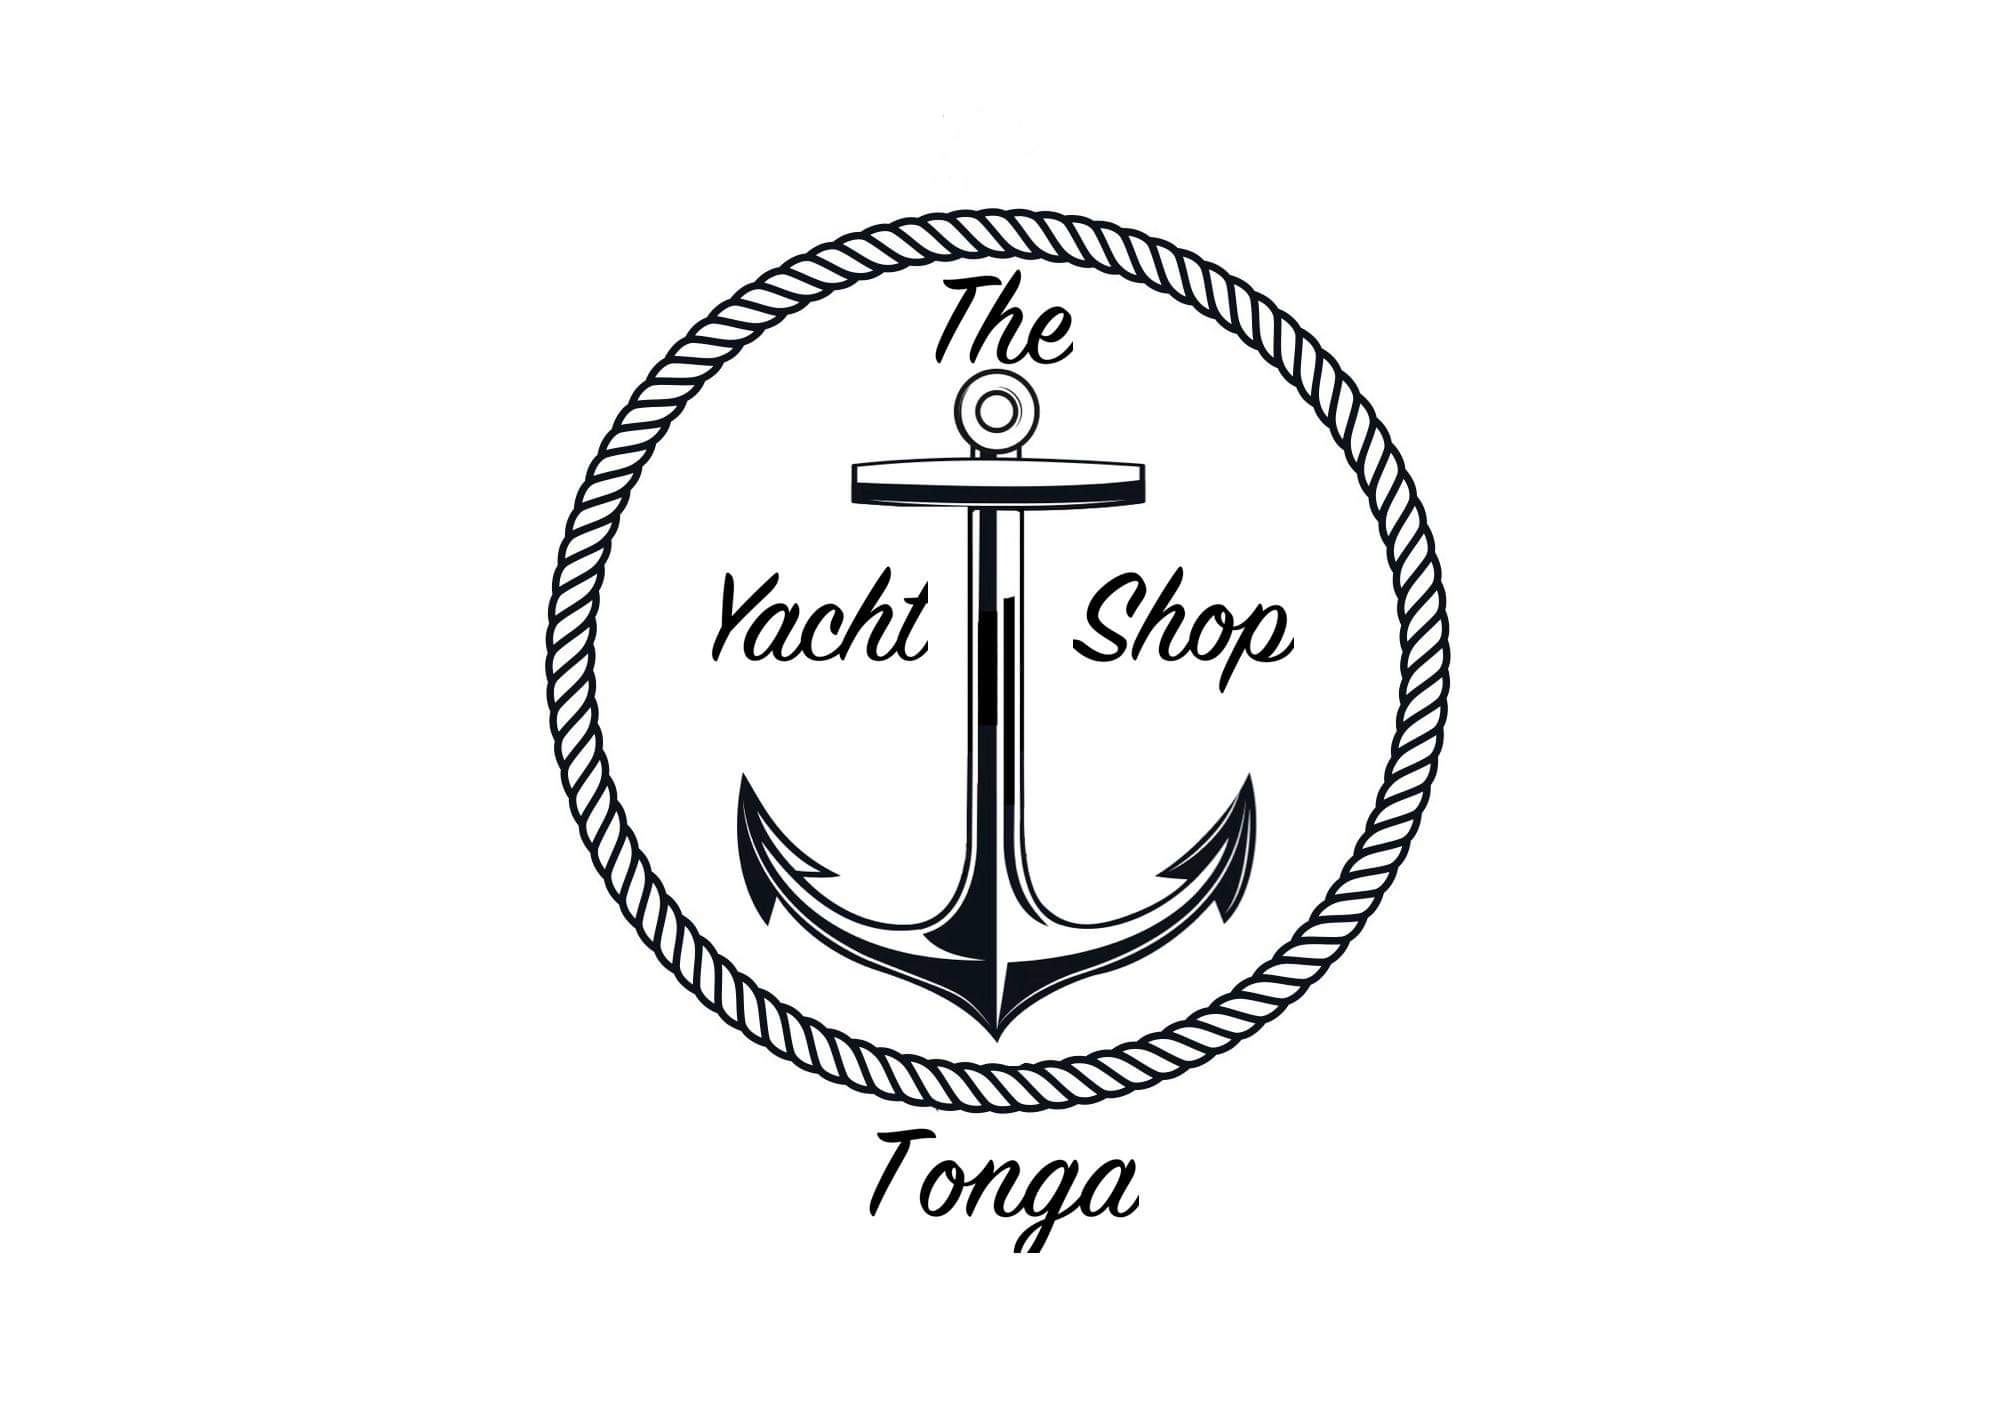 The Yacht Shop, Tonga